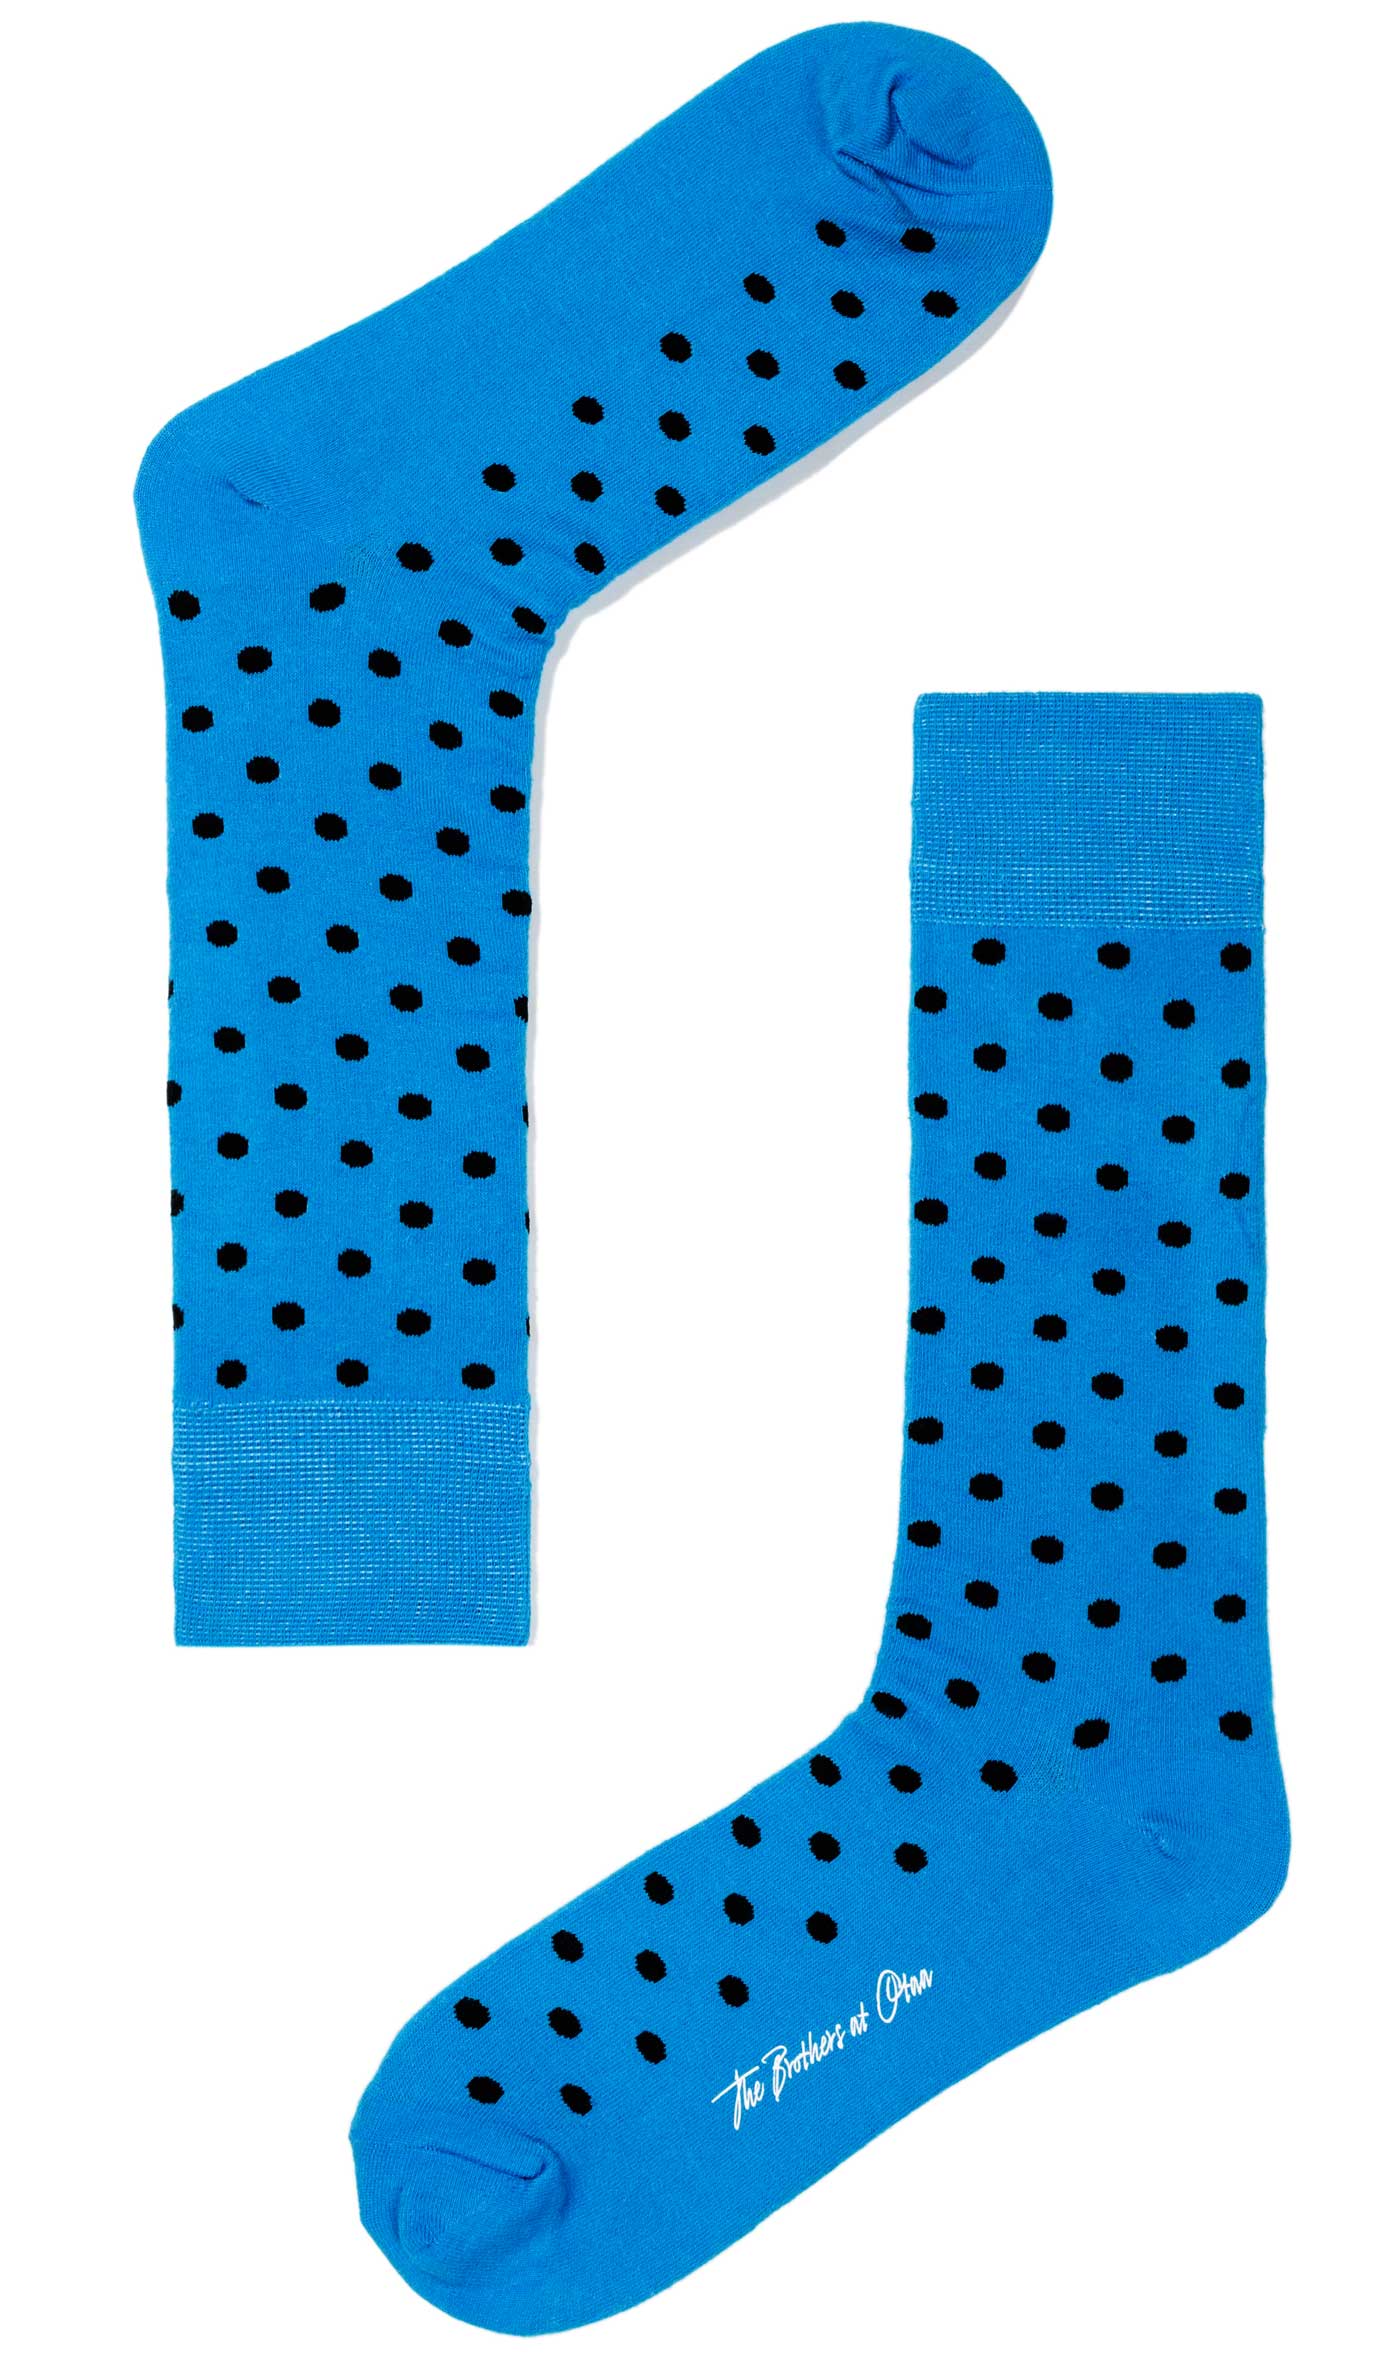 Genie Blue Dot Socks | Mens Happy Socks | Polka Dots Cotton Crew Sock ...